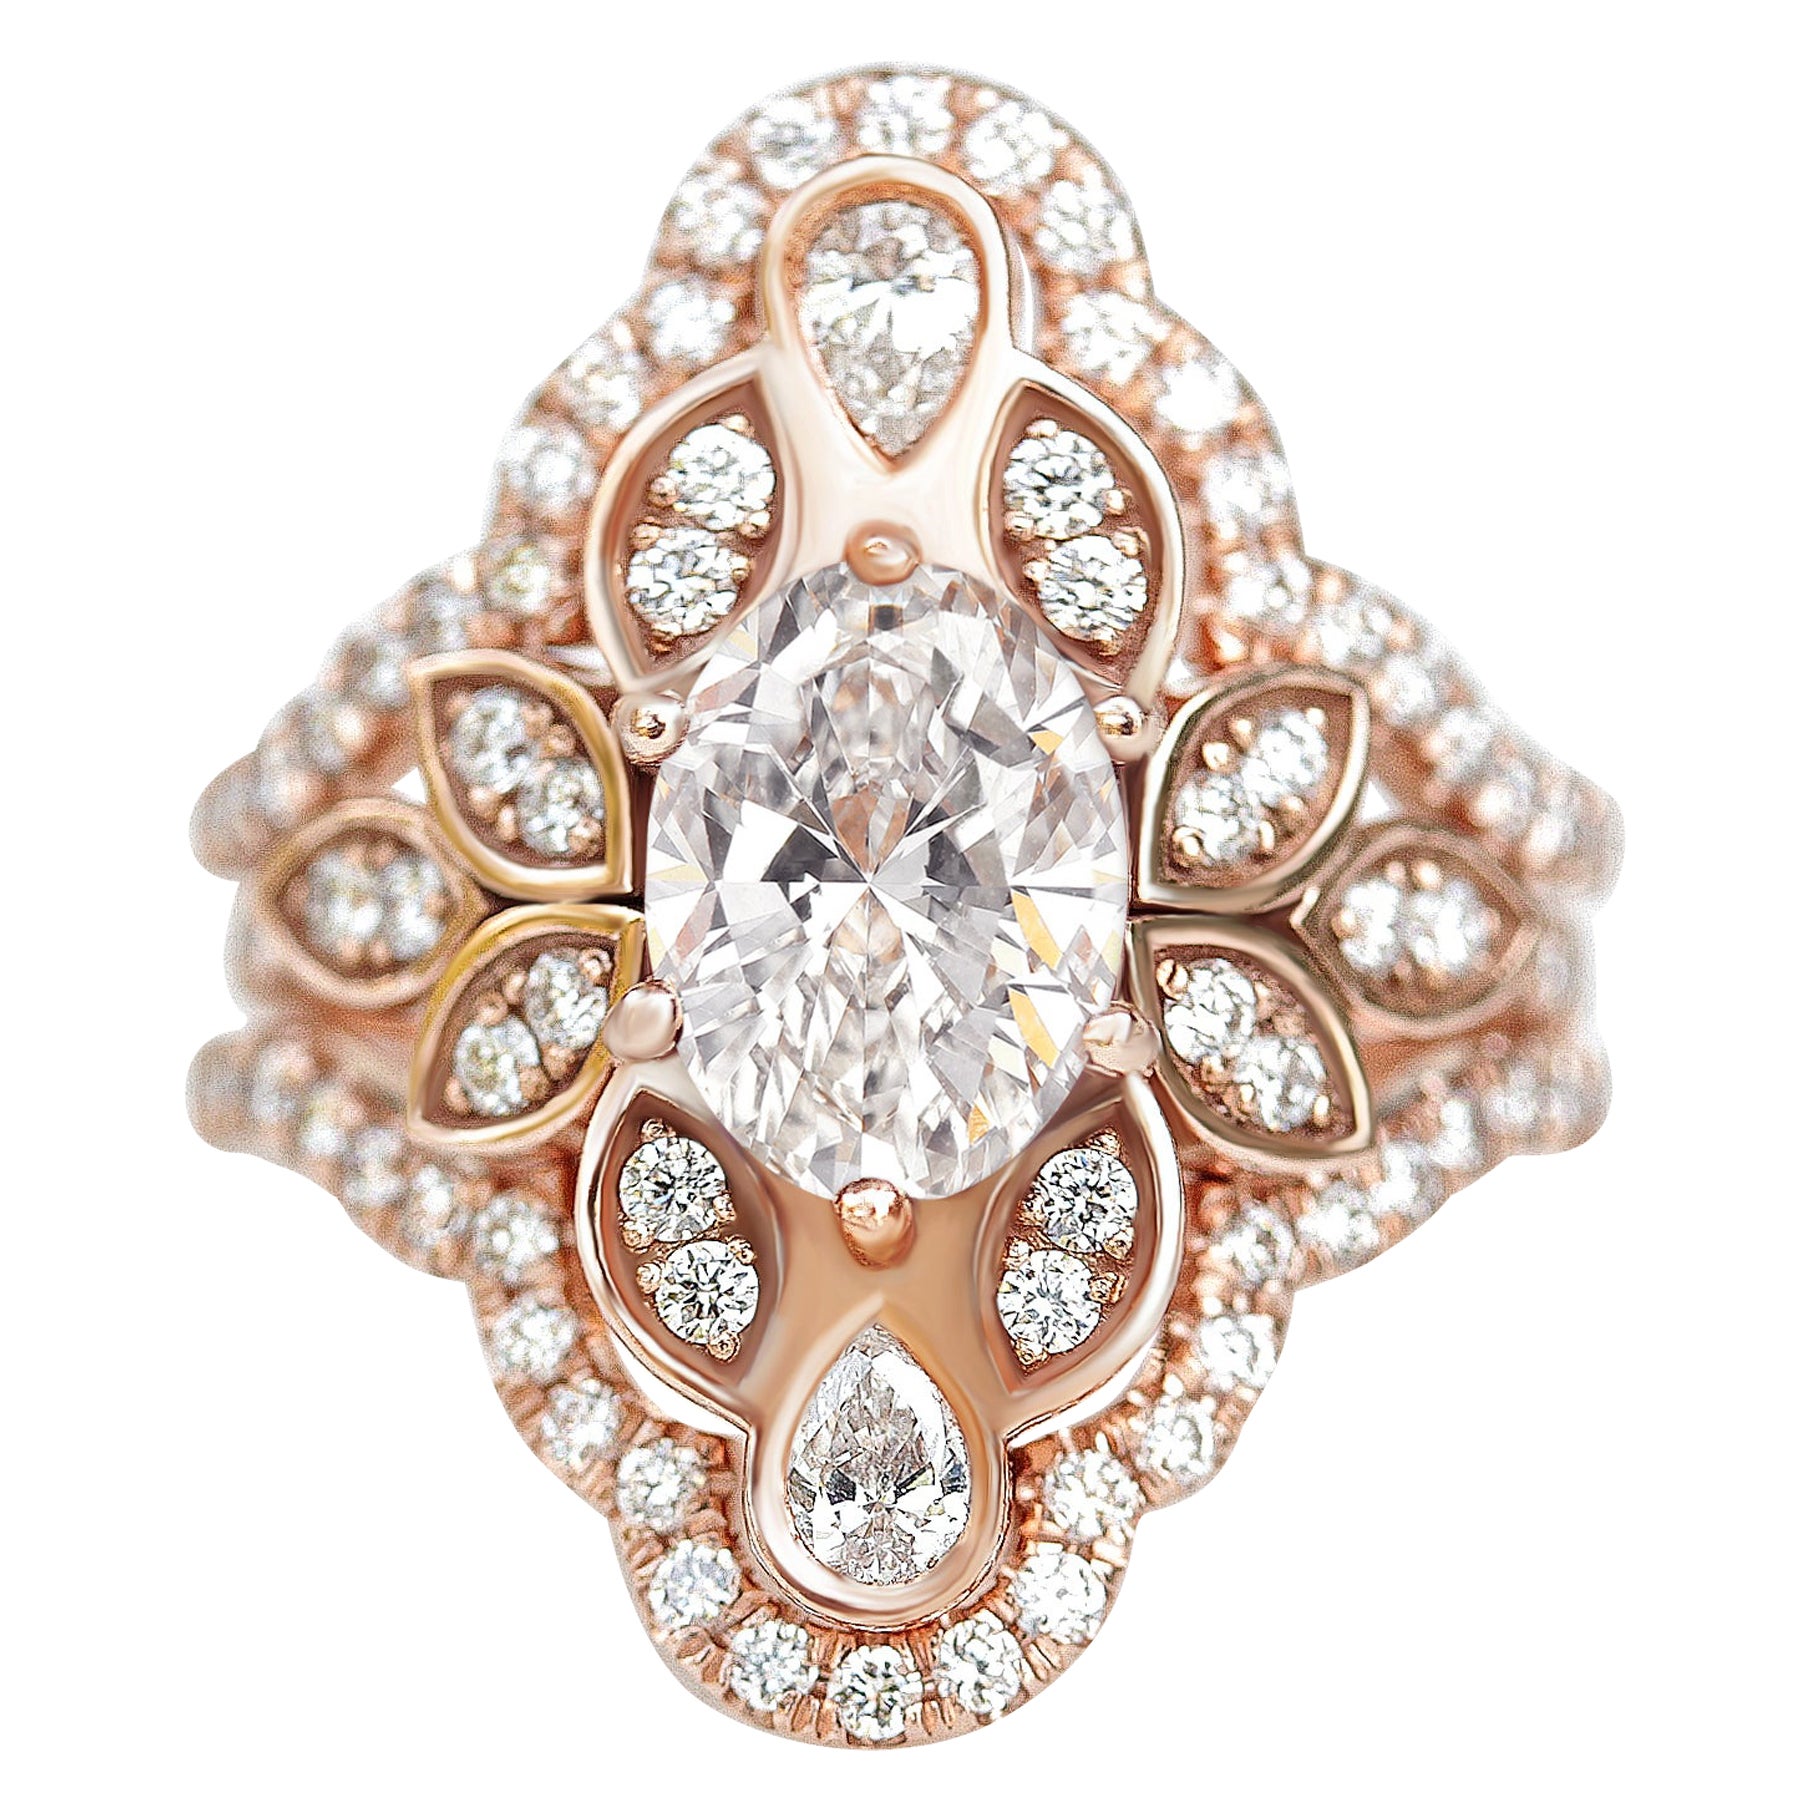 Unique Flower Engagement Ring Set, delicate and feminine - 